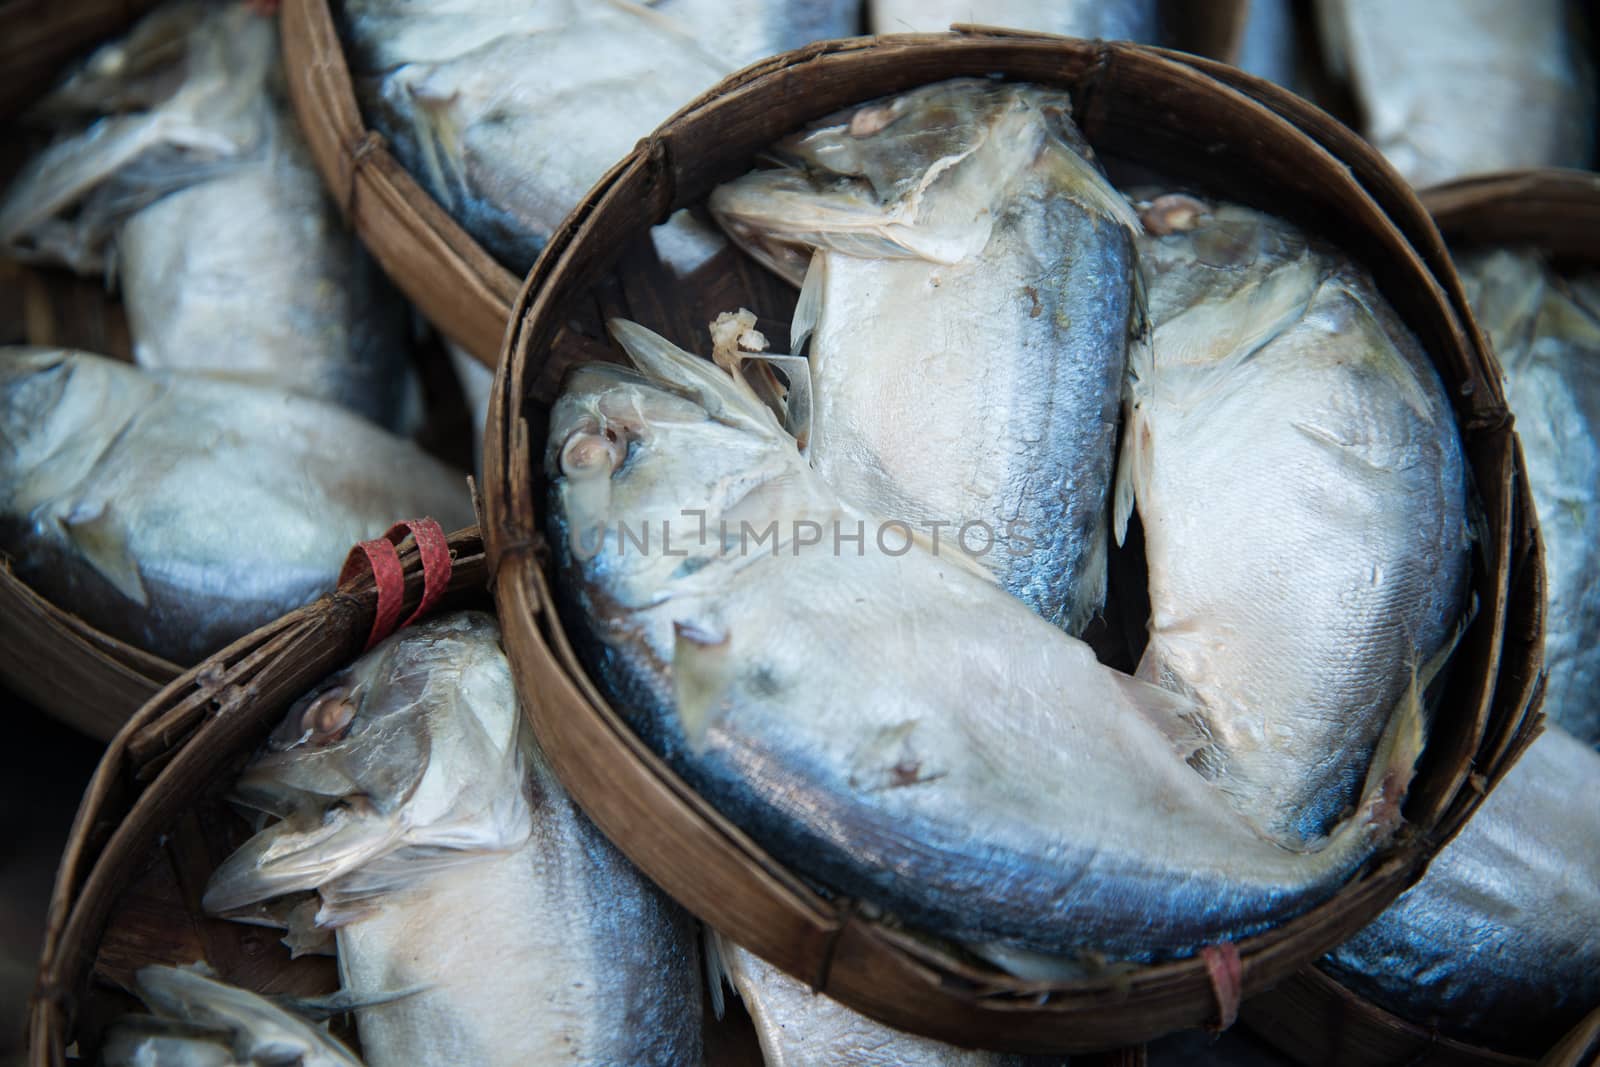 Mackerel fish in bamboo basket at market, Thailand by jakgree